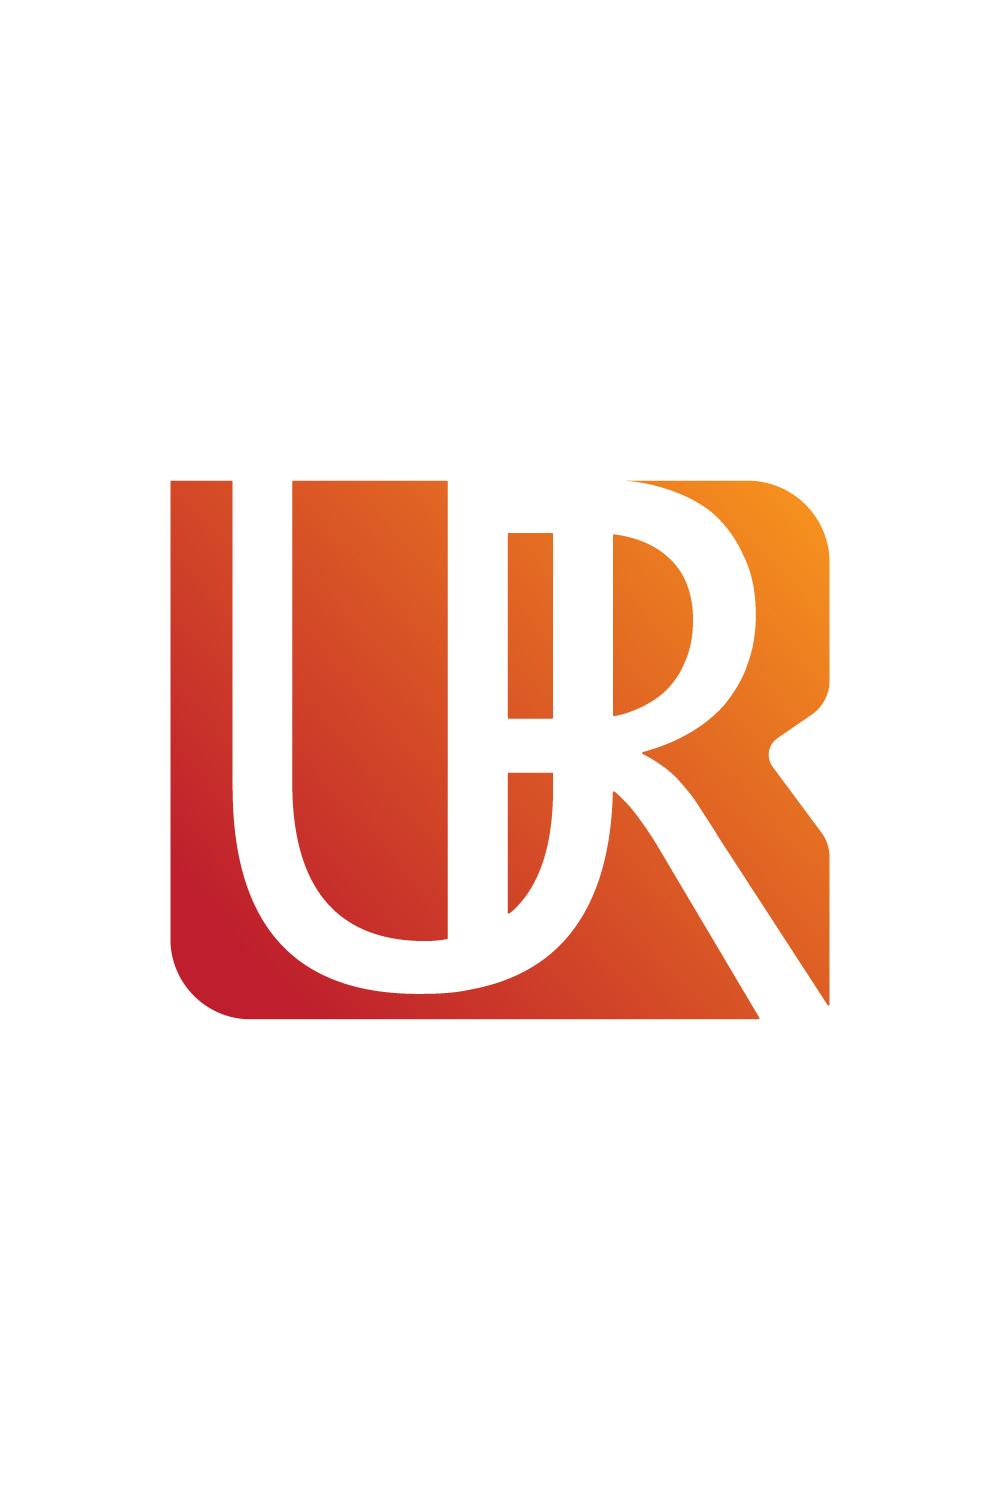 UR letters logo design vector images RU logo monogram template design UR logo orange color best company identity pinterest preview image.